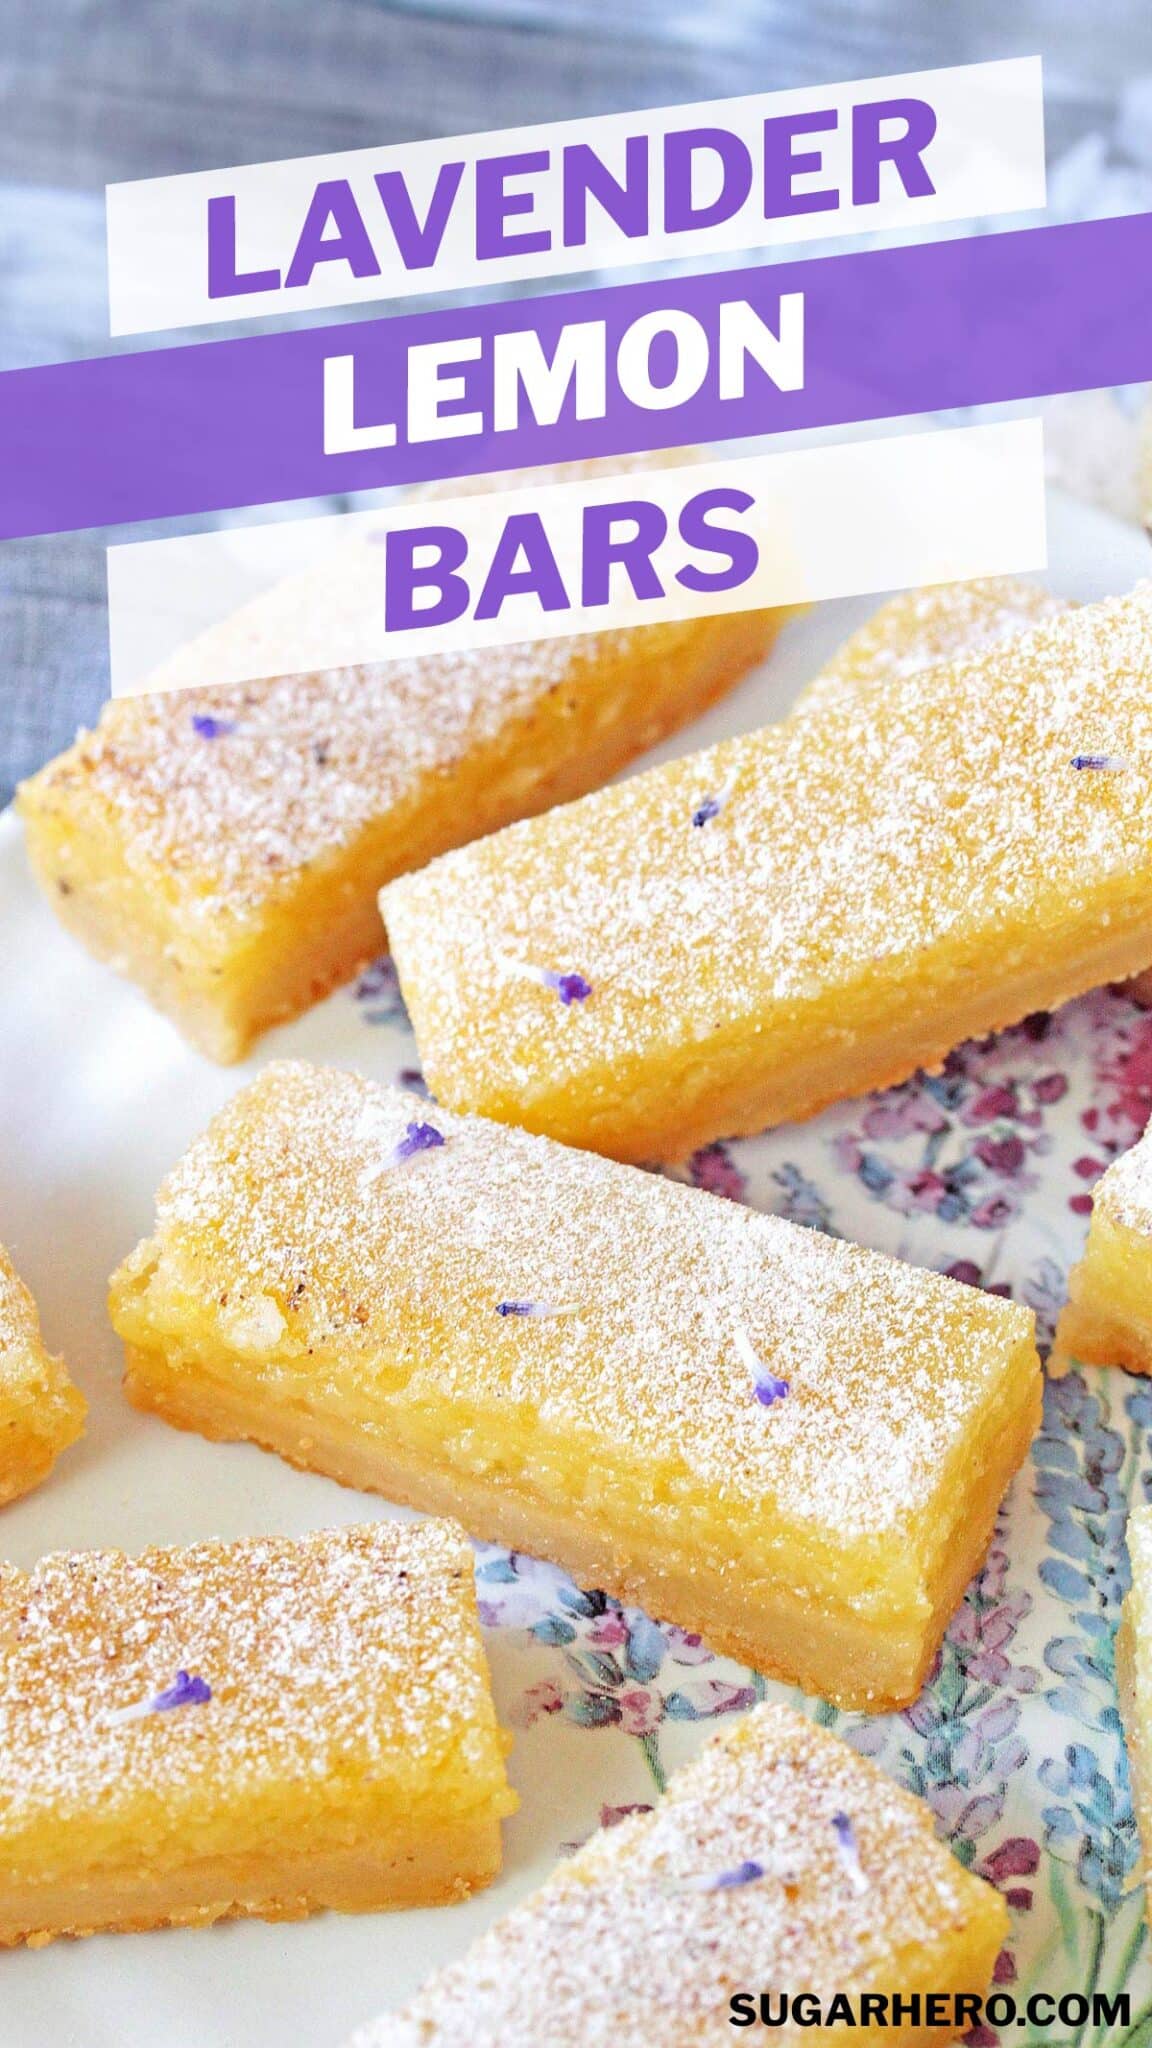 Image of Lavender Lemon Bars with text overlay for Pinterest.